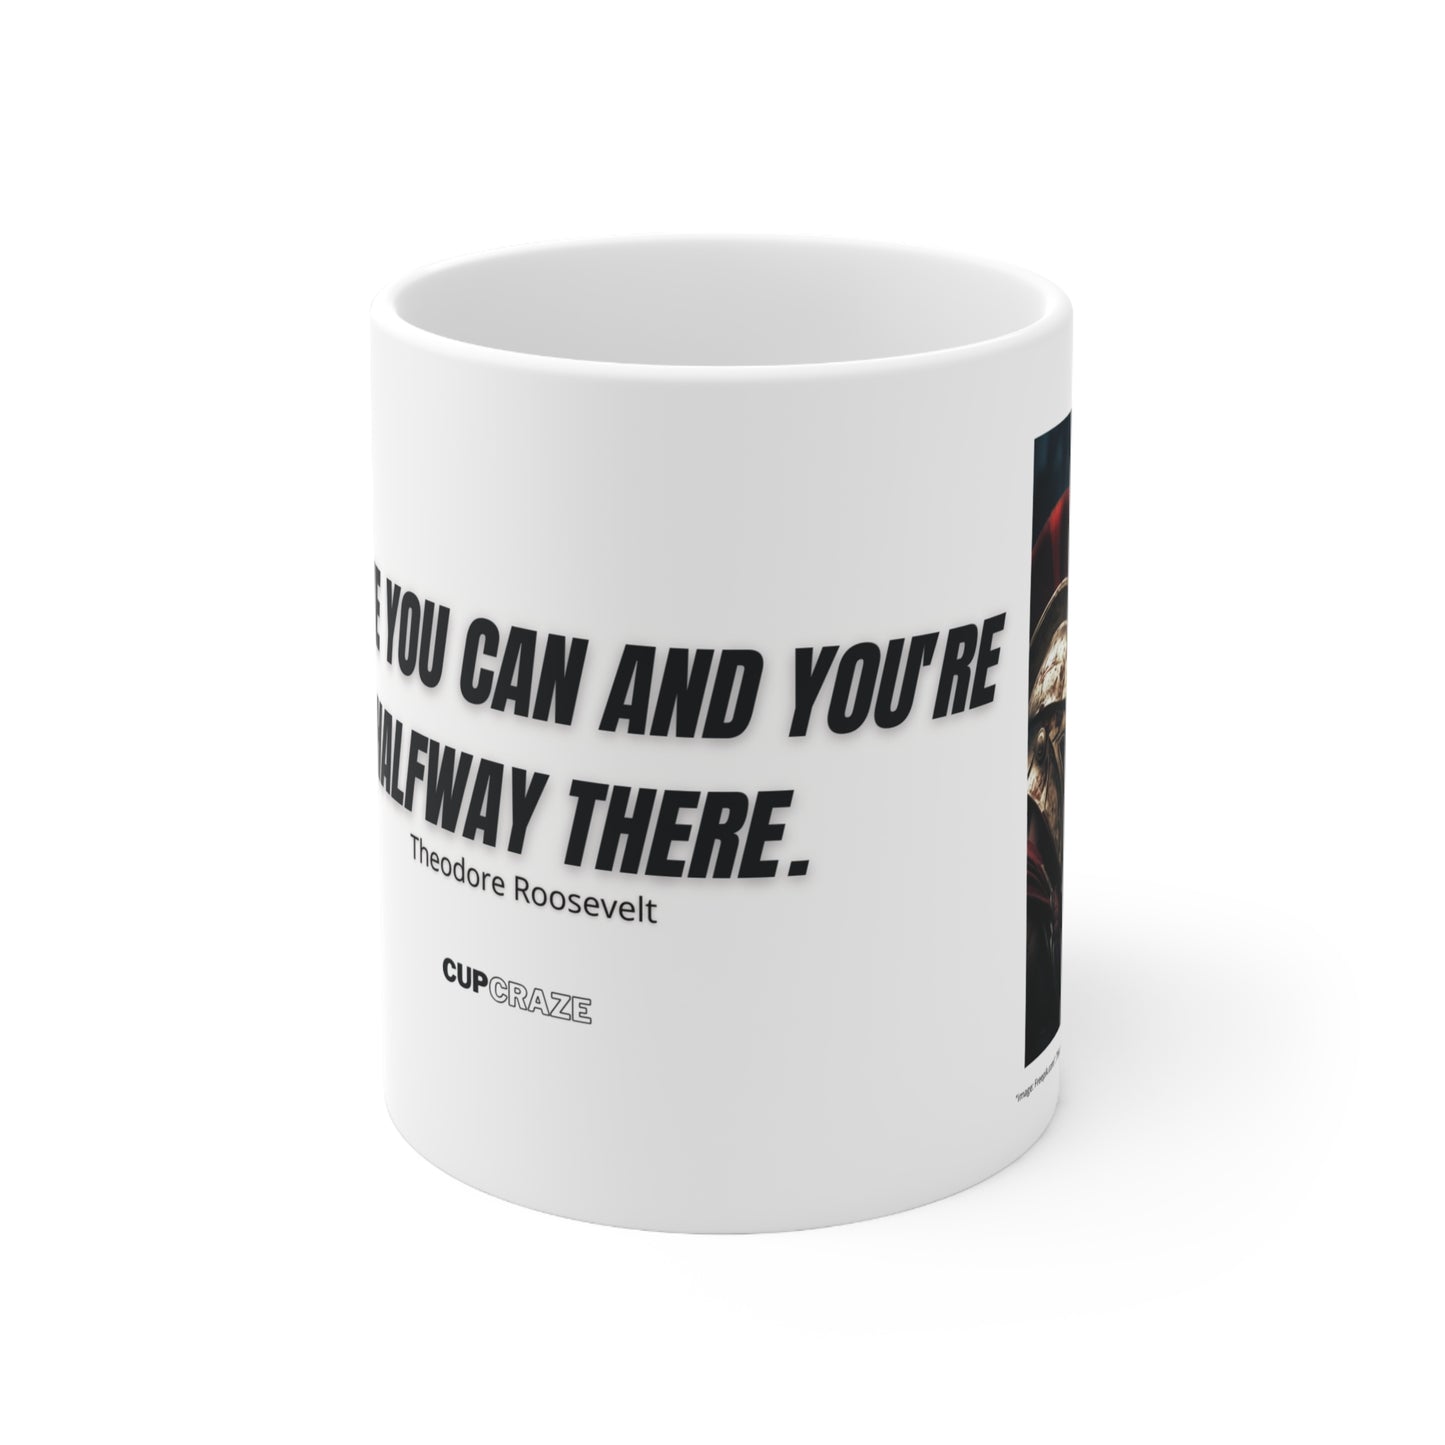 Believe you can - Stoic Ceramic Mug 11oz